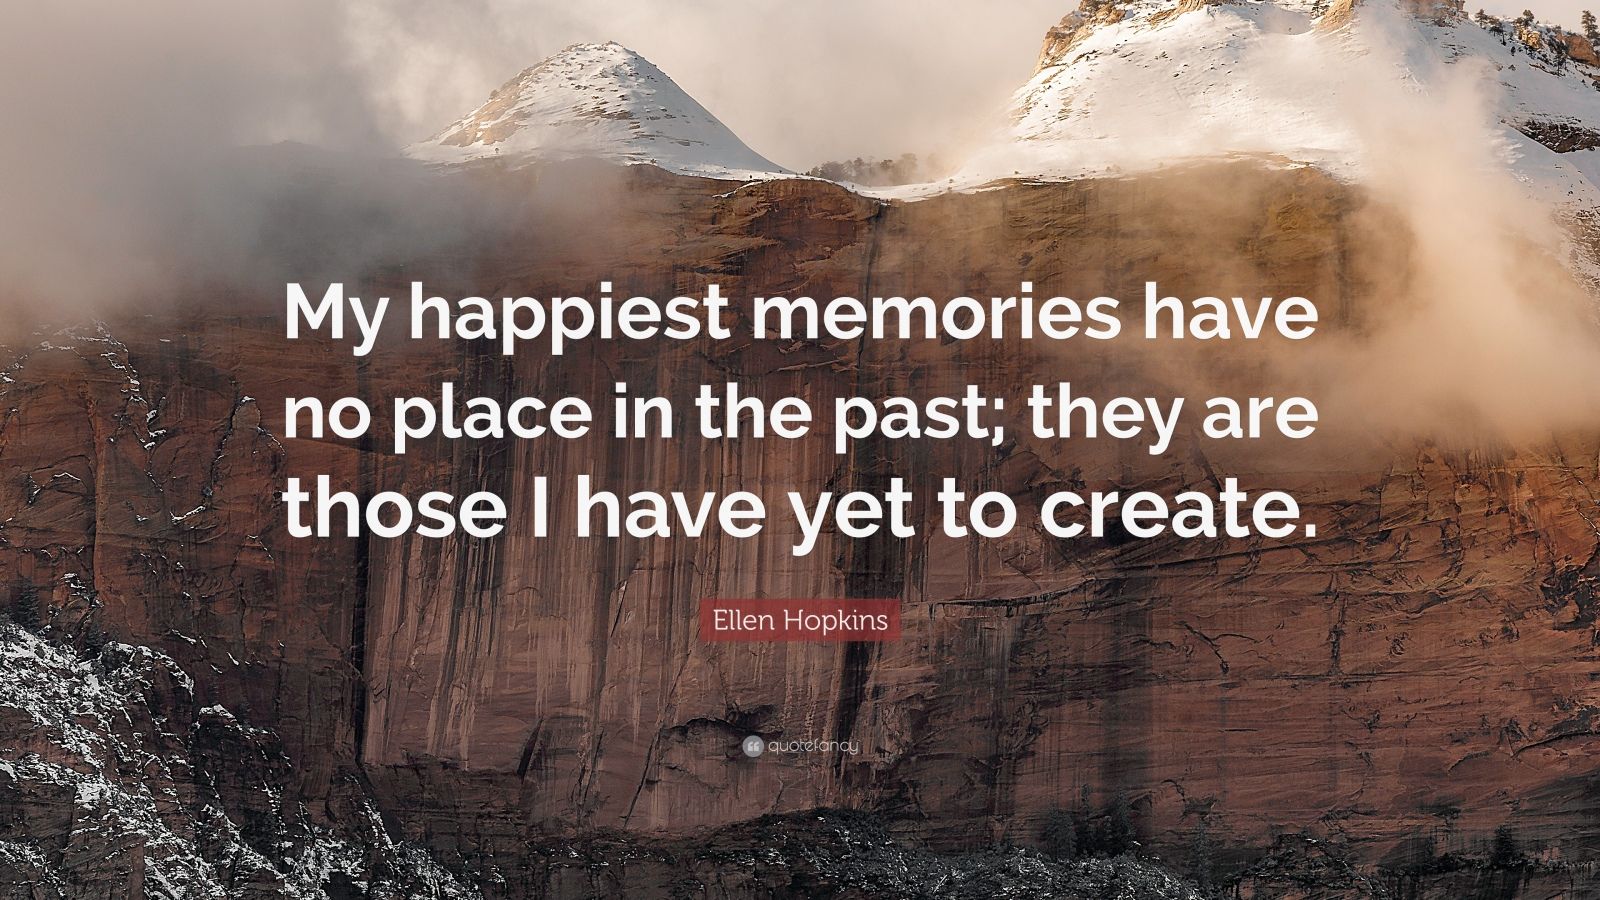 Ellen Hopkins Quote: “My happiest memories have no place in the past ...